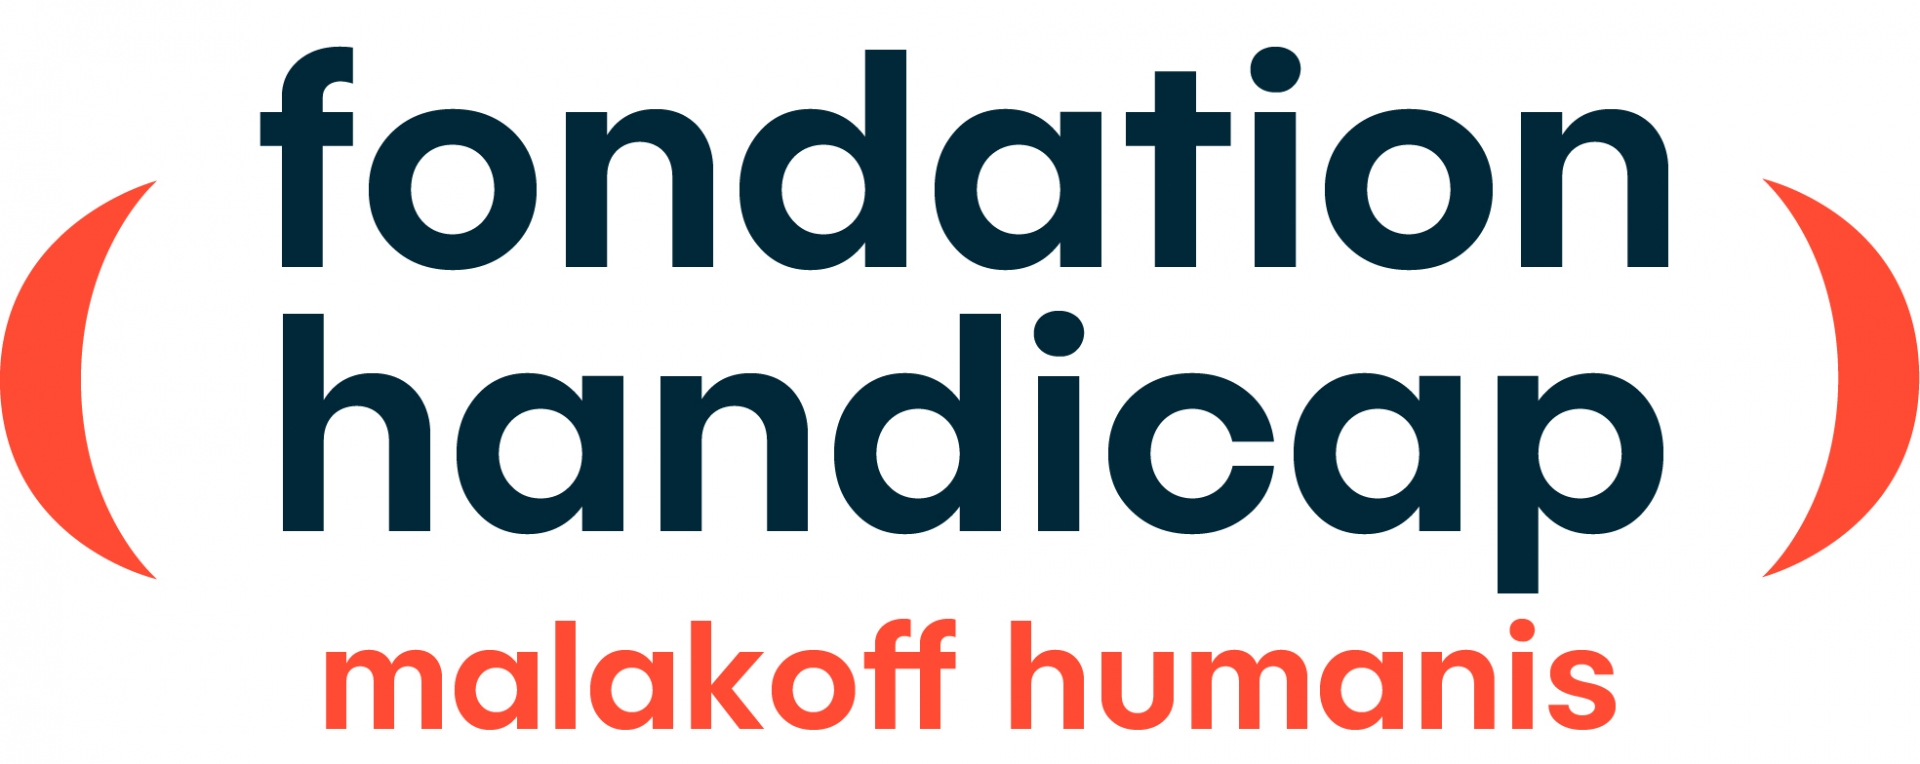 Logo de la Fondation Malakoff Humanis Handicap, jpg